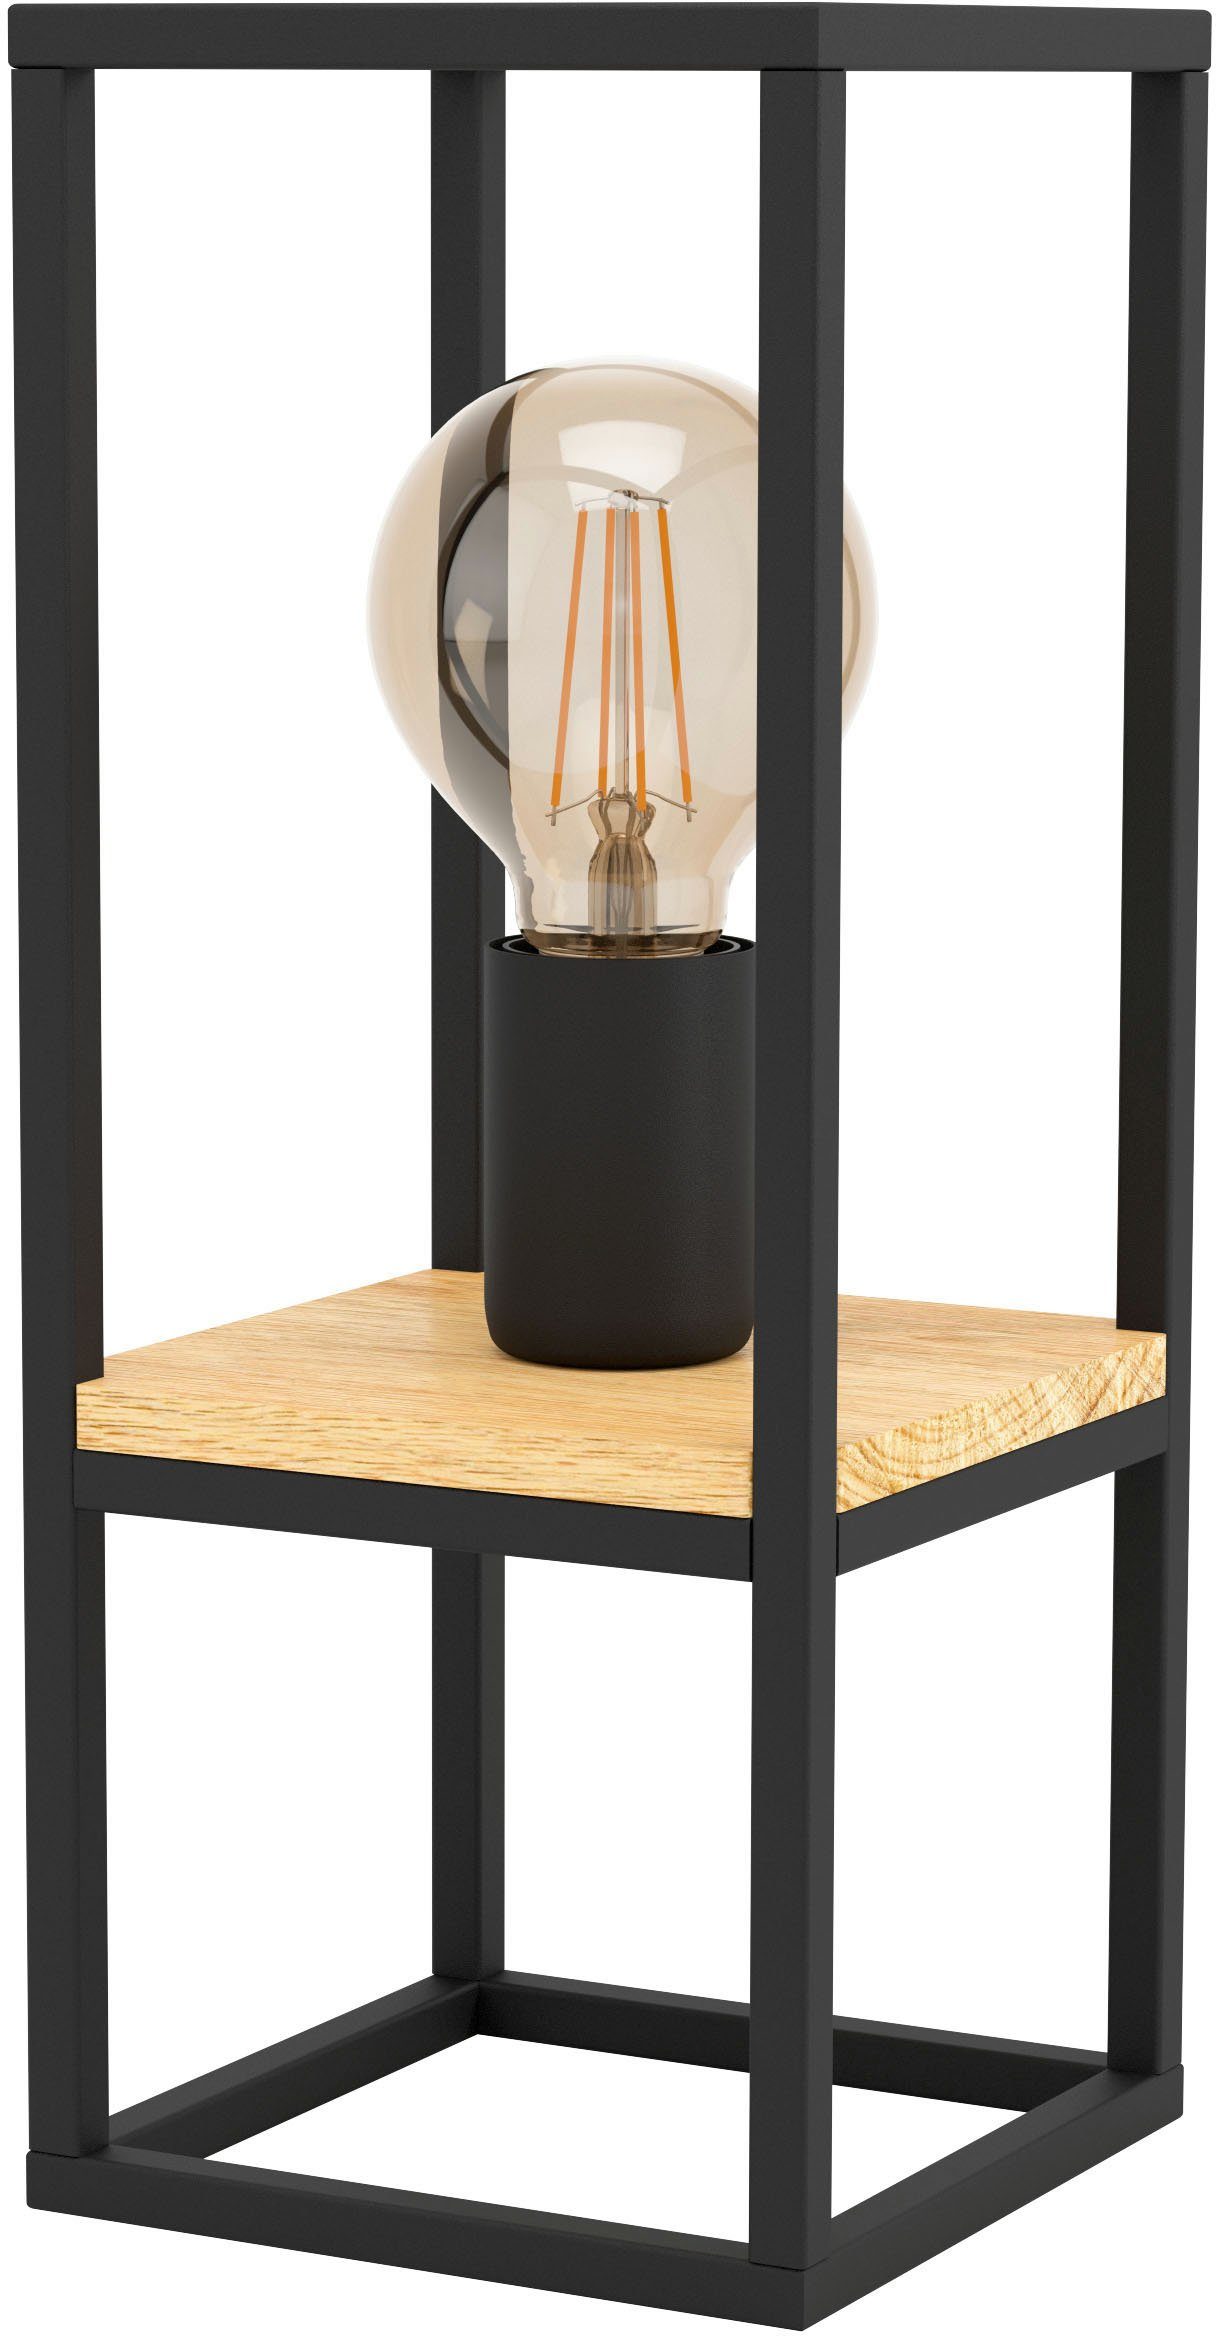 EGLO Tischleuchte LIBERTAD, Leuchtmittel wechselbar, ohne Leuchtmittel,  Tischleuchte in schwarz und braun aus Stahl, Holz - exkl. E27 - 40W